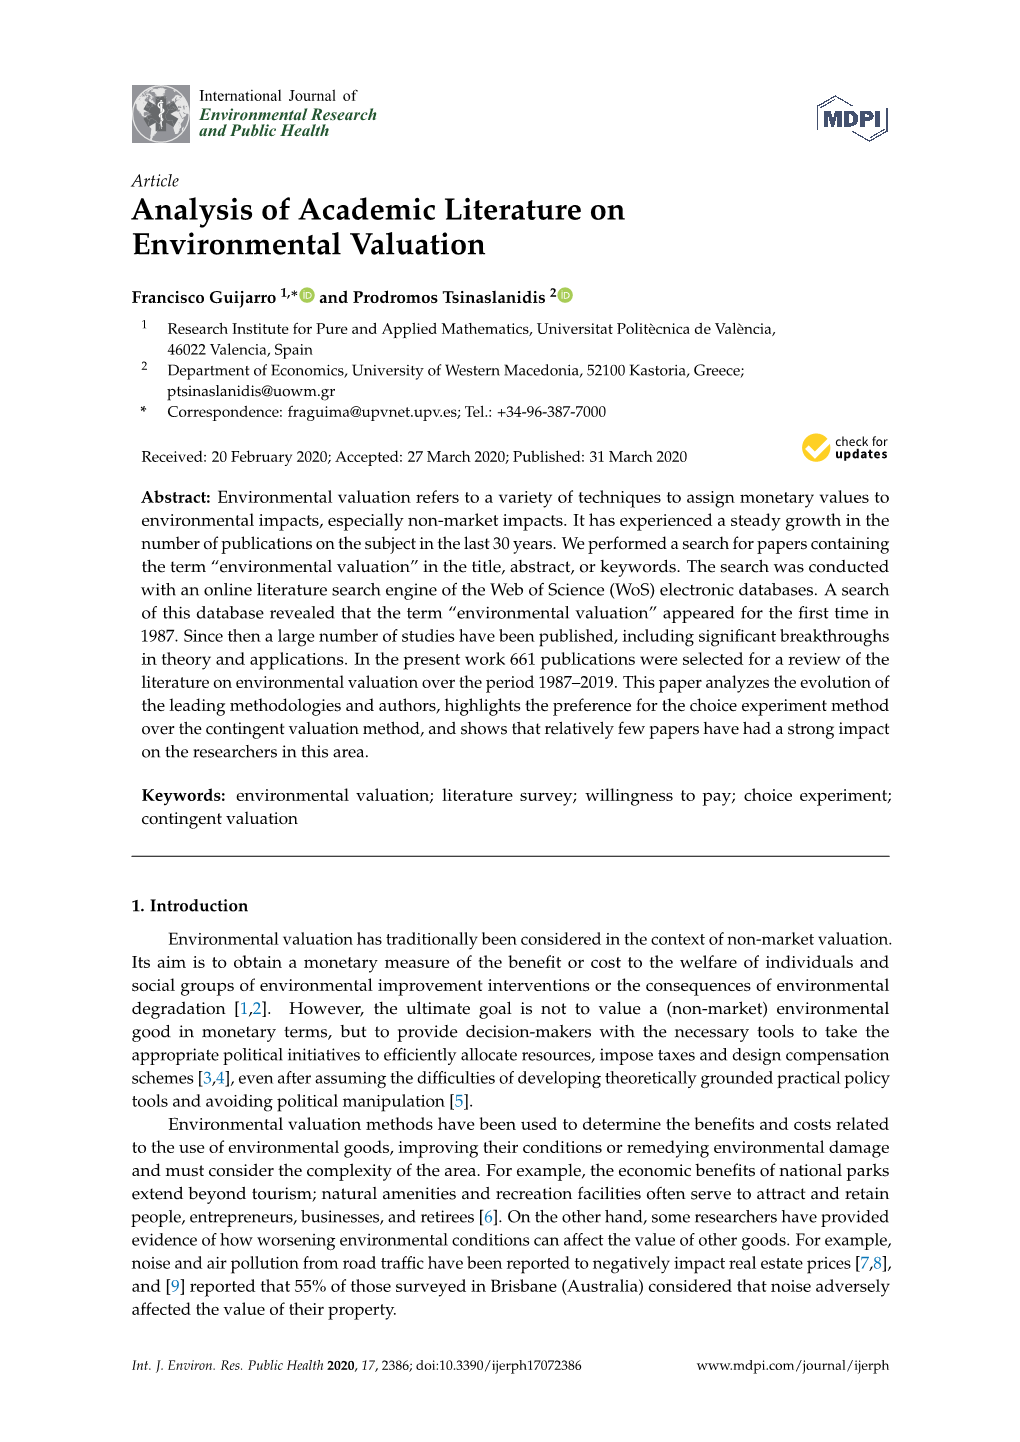 Analysis of Academic Literature on Environmental Valuation